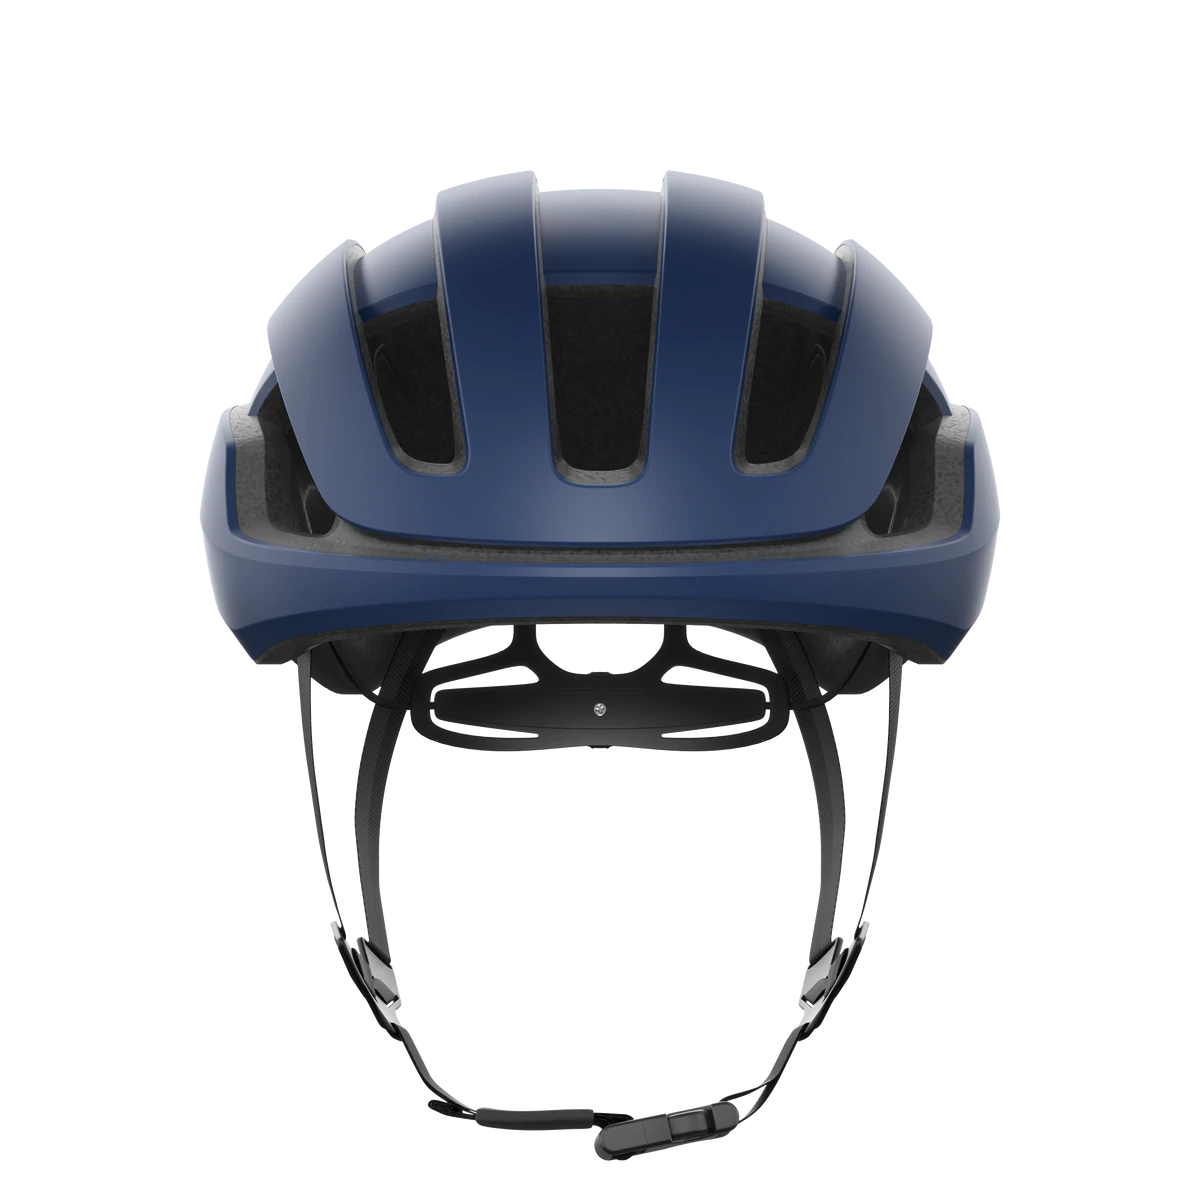 JCF公認ロードバイク用ヘルメット 10772-1589 オムネエアミップス アジアンフィット Omne Air Wf Mips Asian-fit - Lead Blue Matt [ユニセックス]